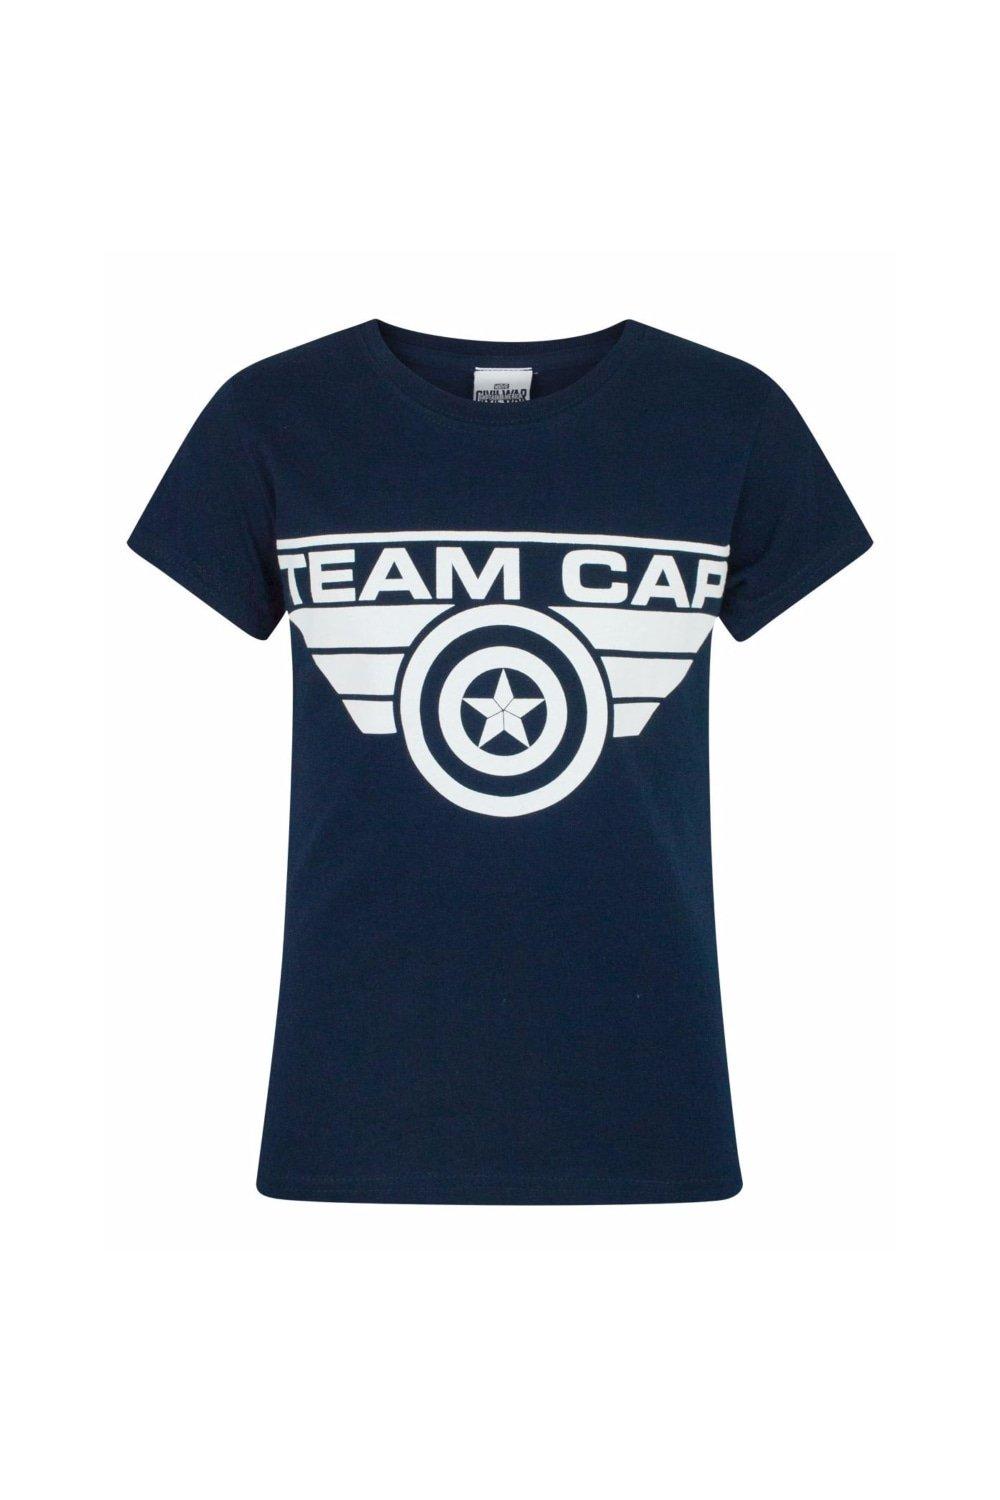 Official Captain America Civil War Team Cap T-Shirt